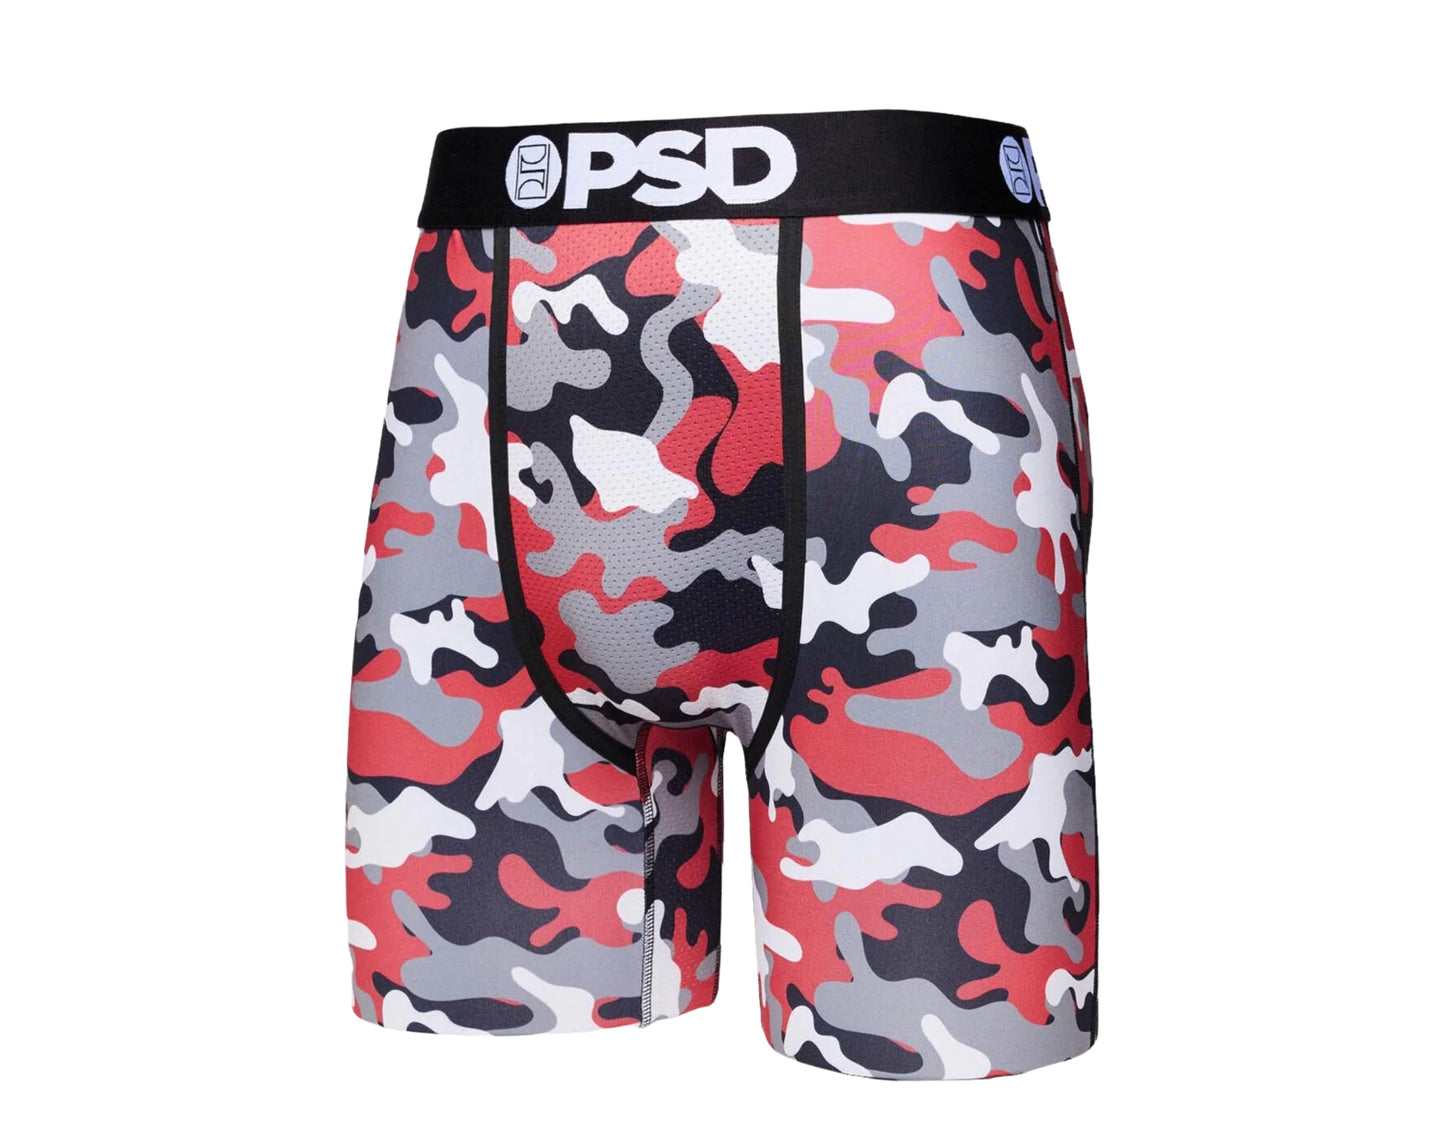 PSD Fall Camo - 3-Pack Boxer Briefs Men's Underwear